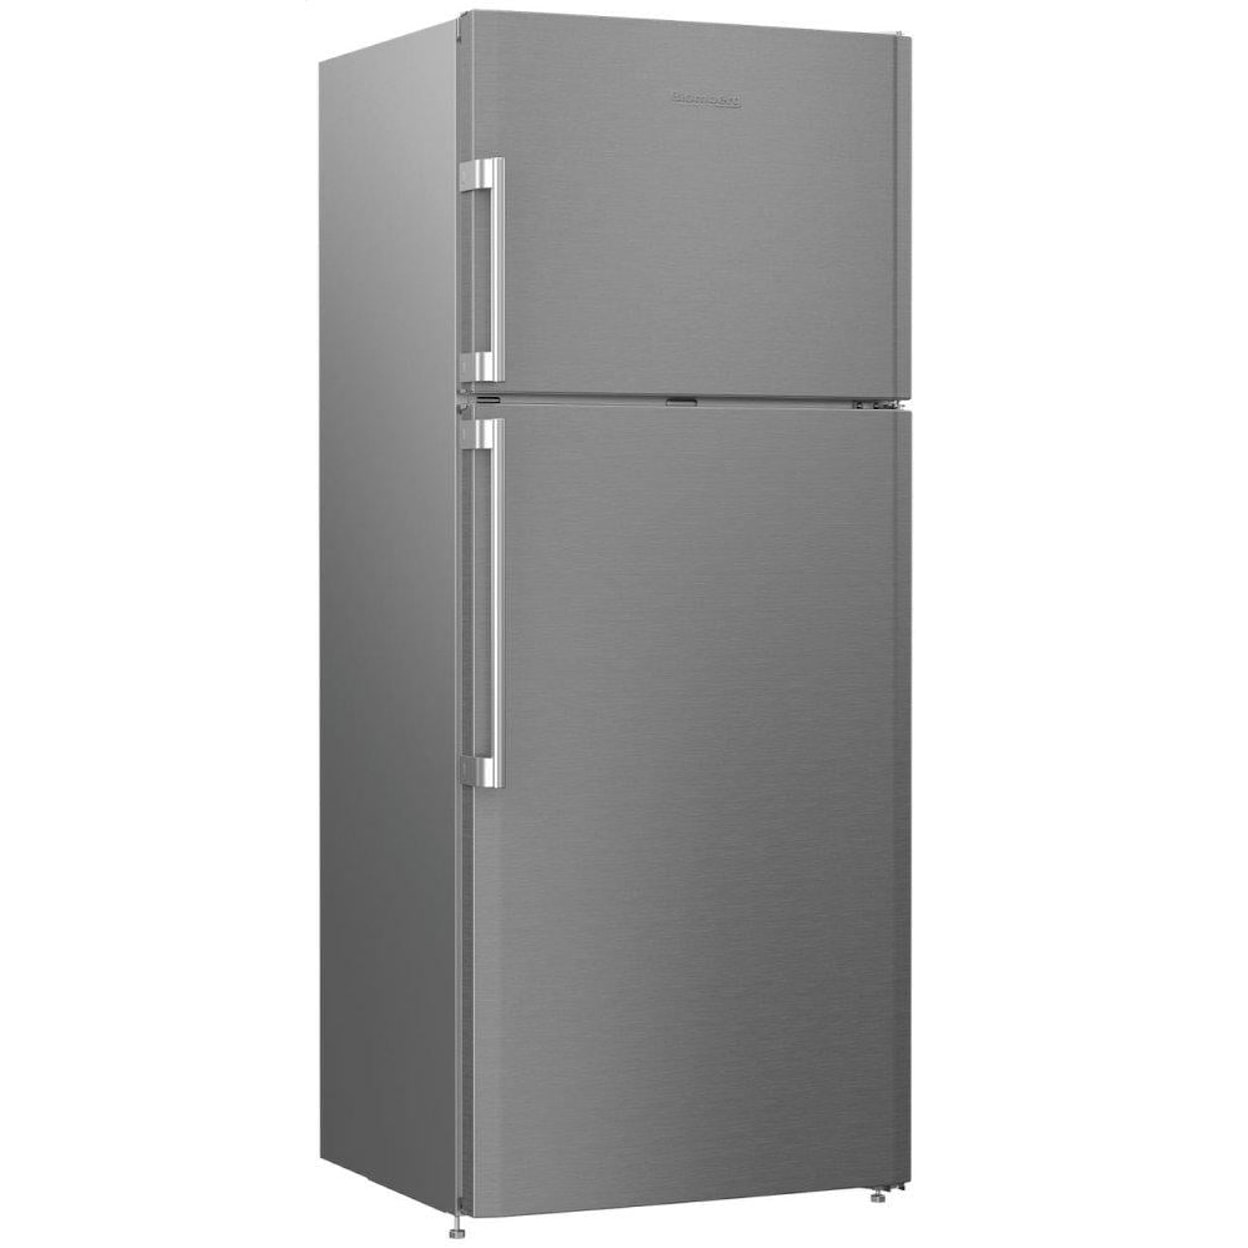 Blomberg Appliances Refrigerators Top Freezer Freestanding Refrigerator